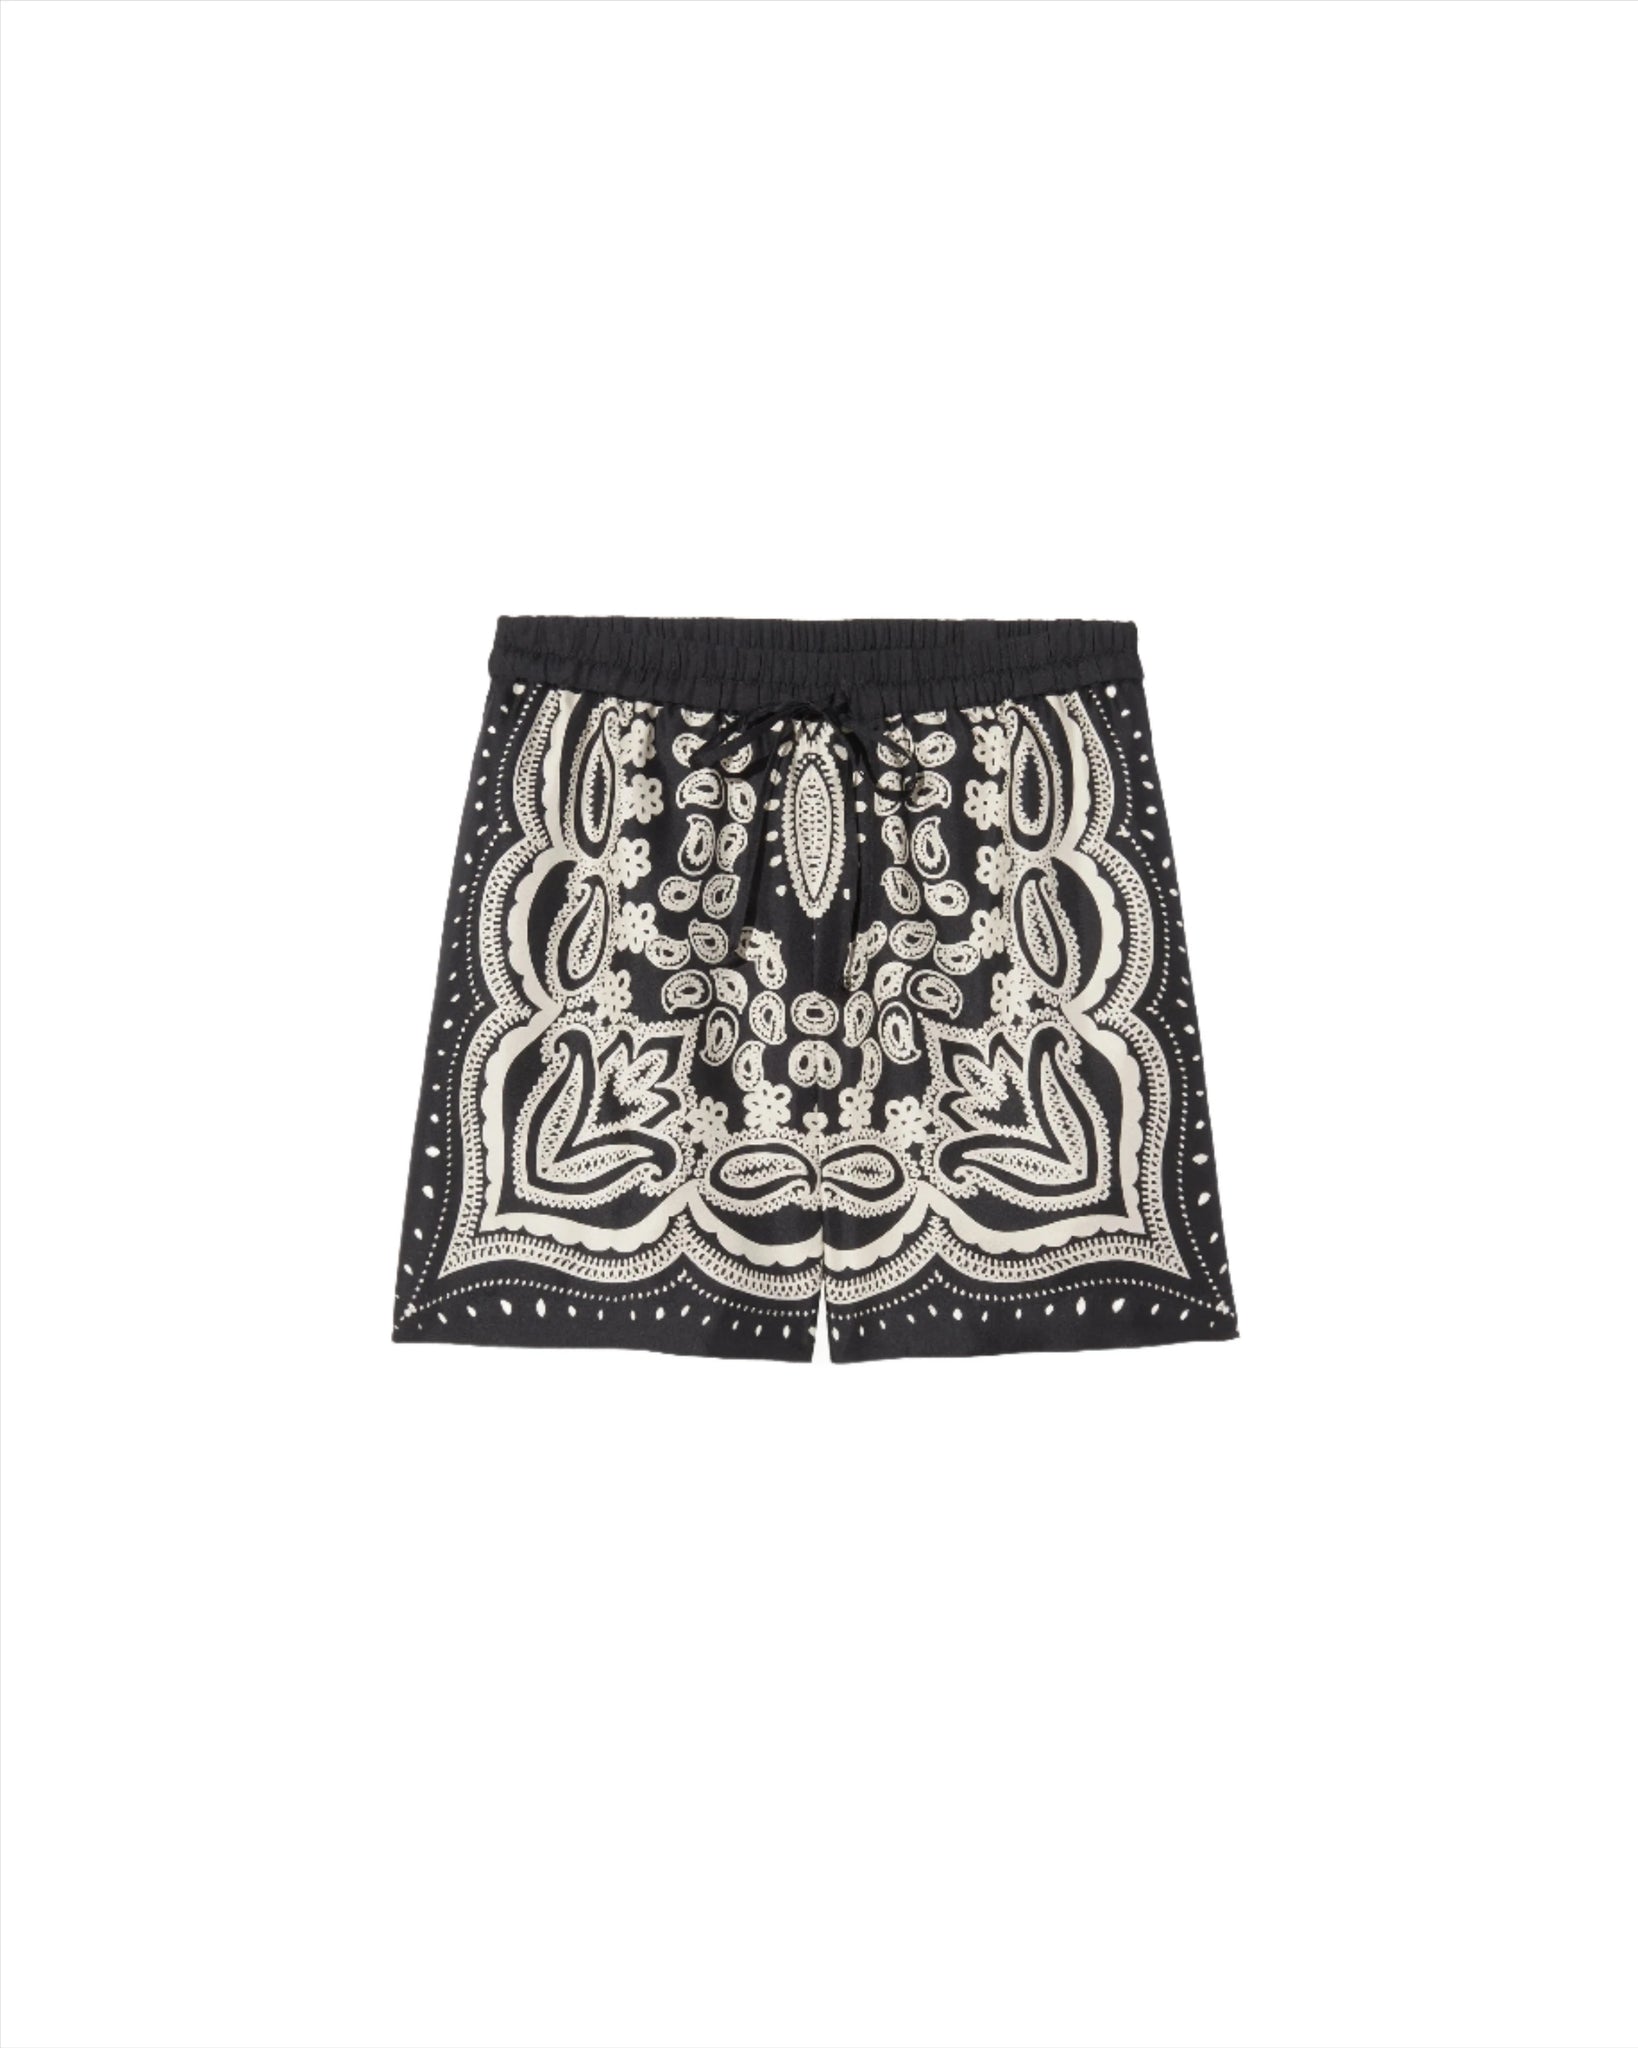 Frances Printed Silk Short in Black/Ivory Bandana